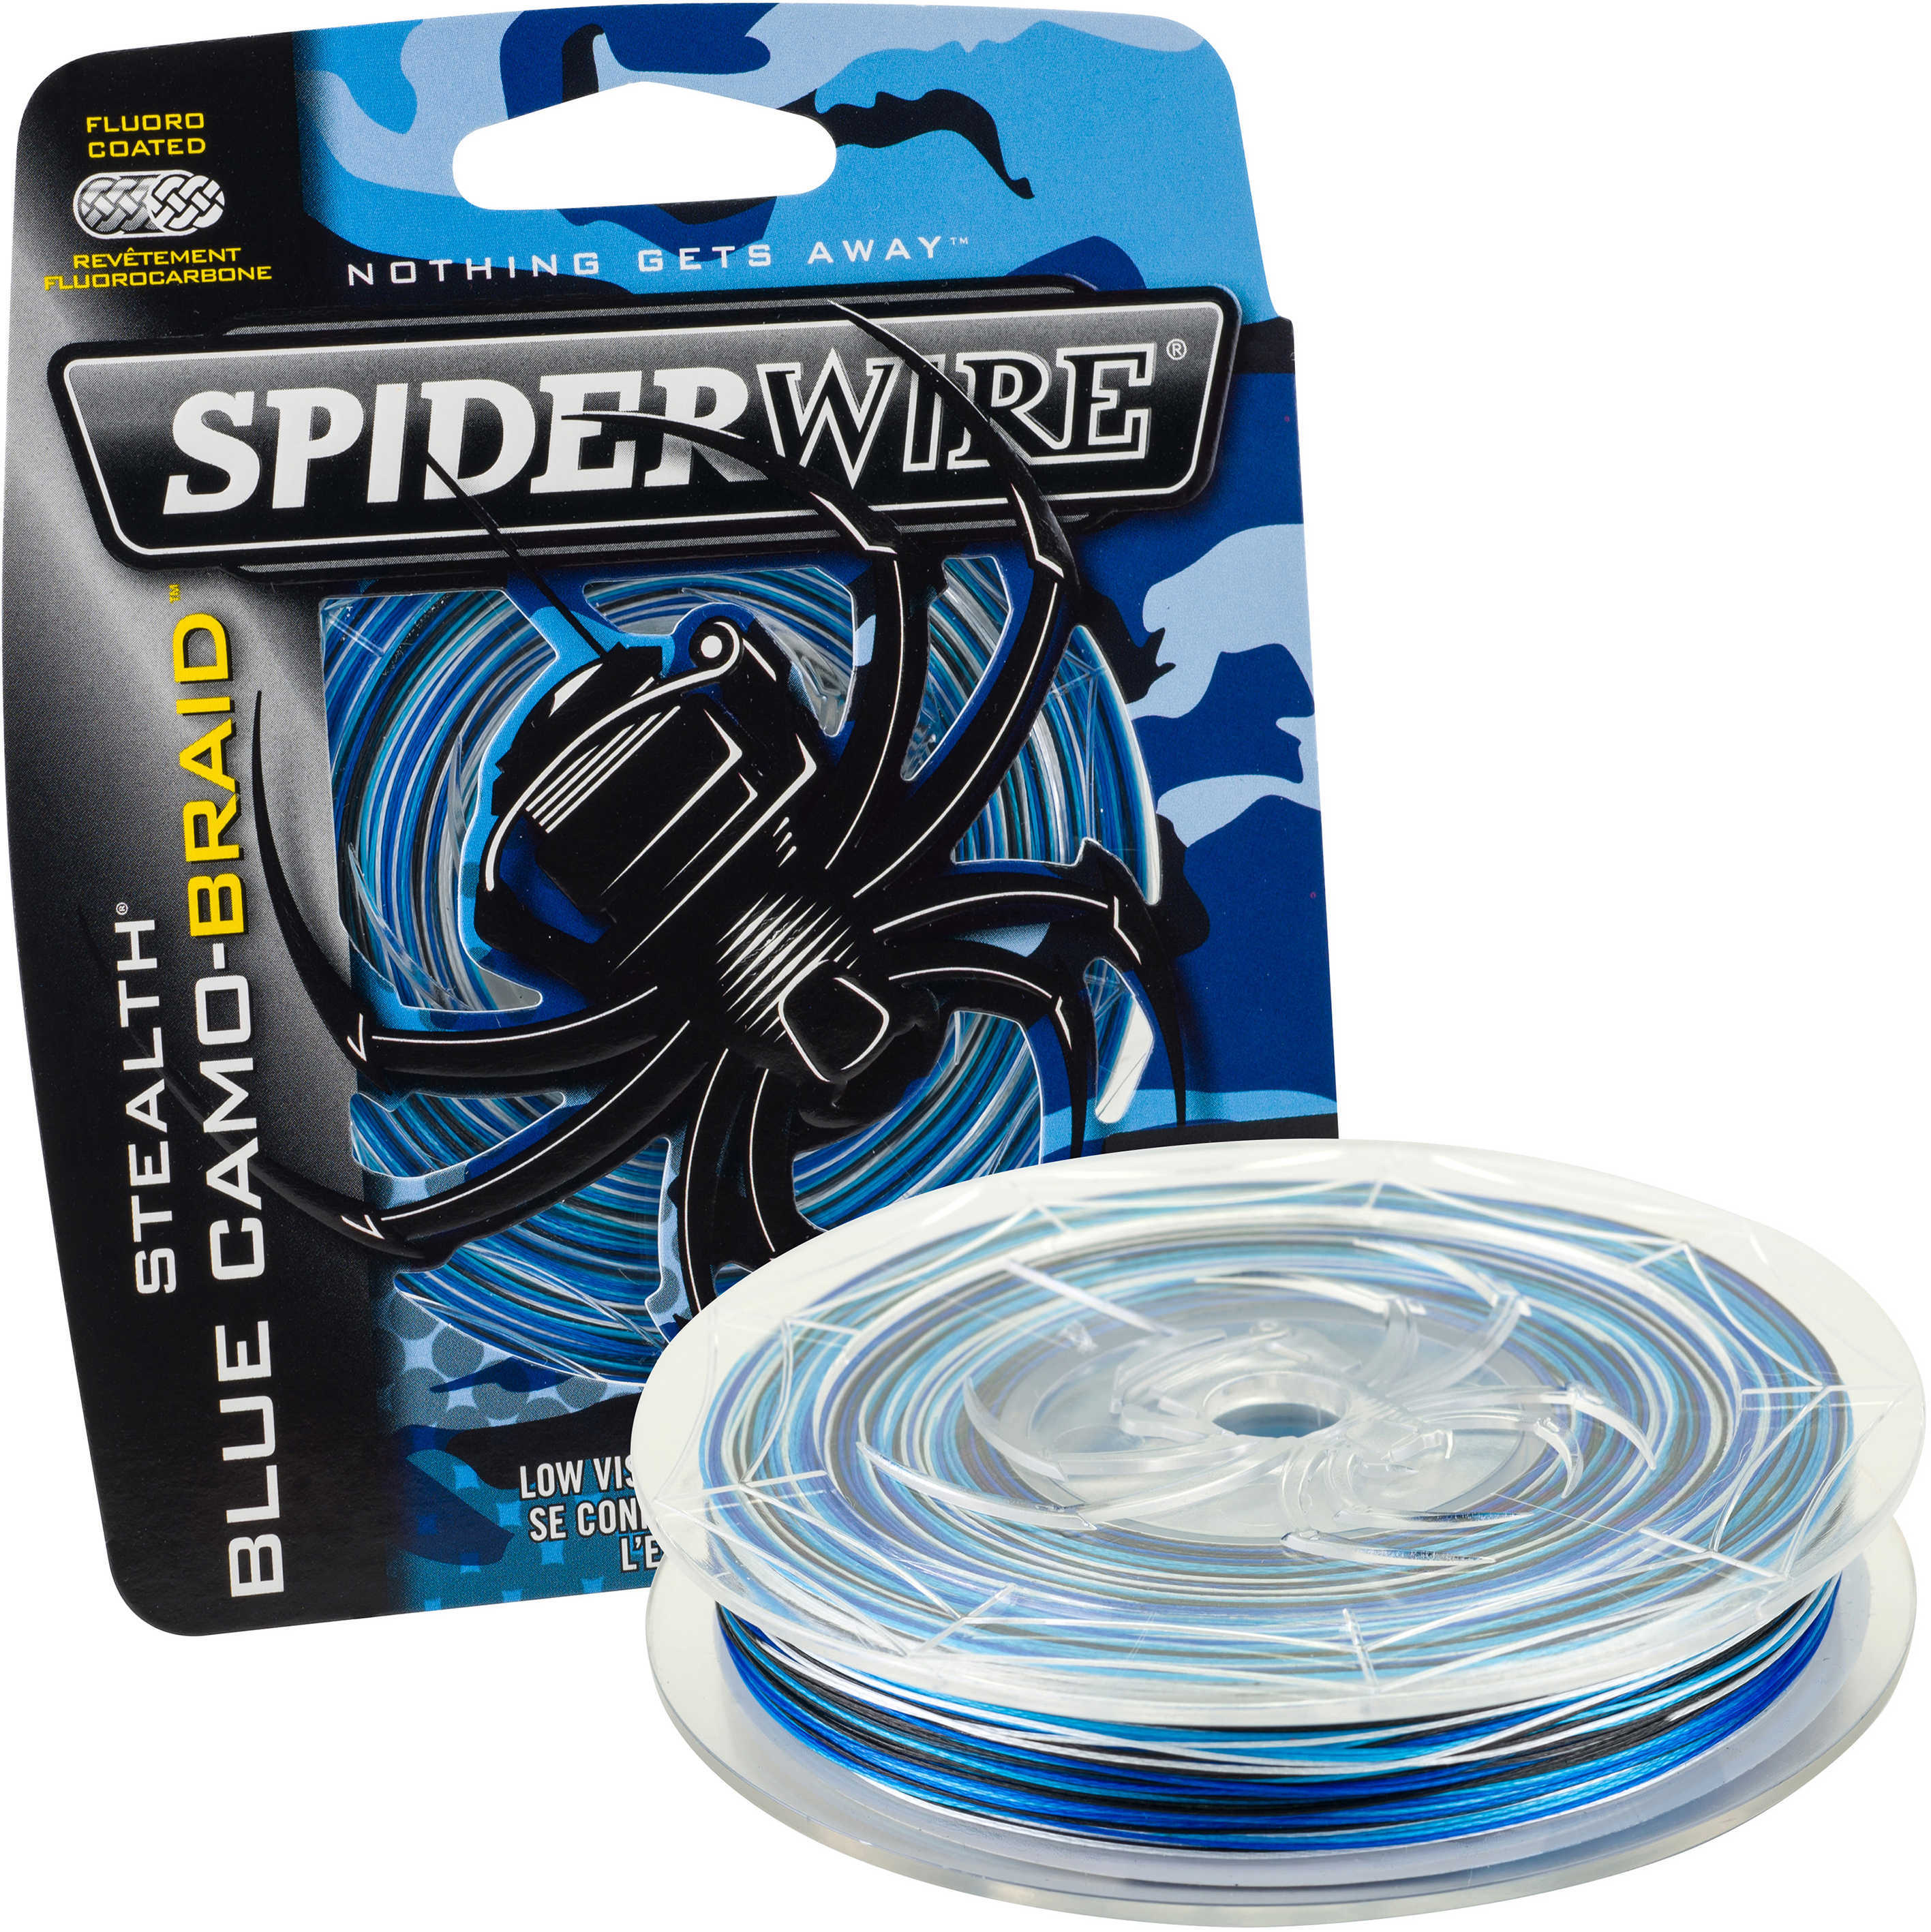 Spiderwire Stealth Braid 300 Yards , 15 lbs Strength, 0.009" Diameter, Blue Camo Md: 1370445